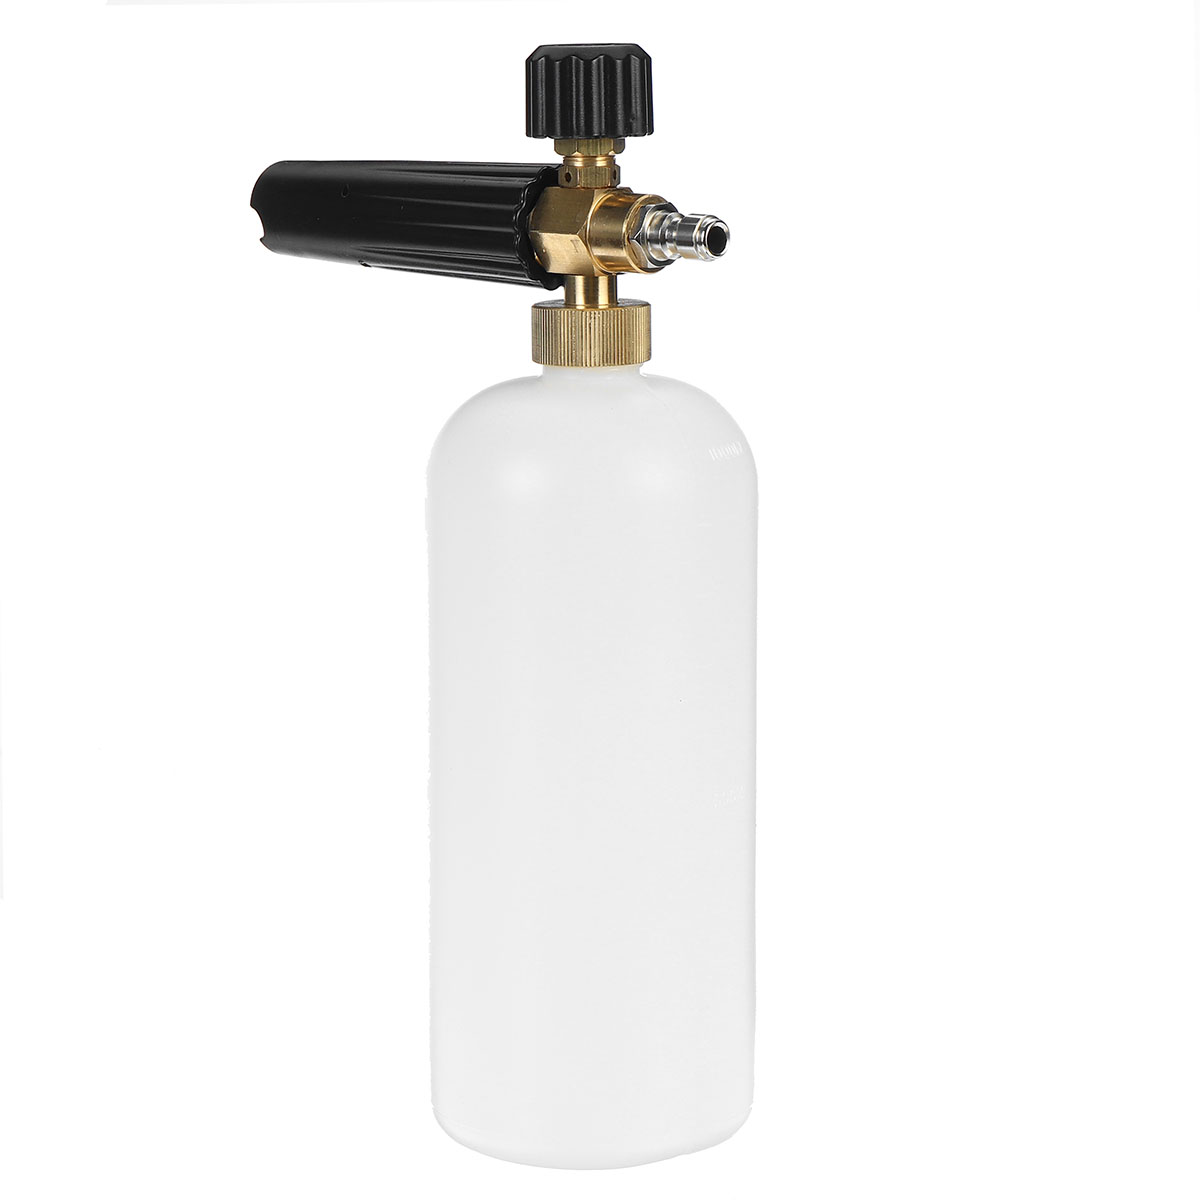 Adjustable-Snow-Foam-Lance-Sprayer-Washer-Soap-Bottle-Car-Pressure-Washer-1L-1662575-4